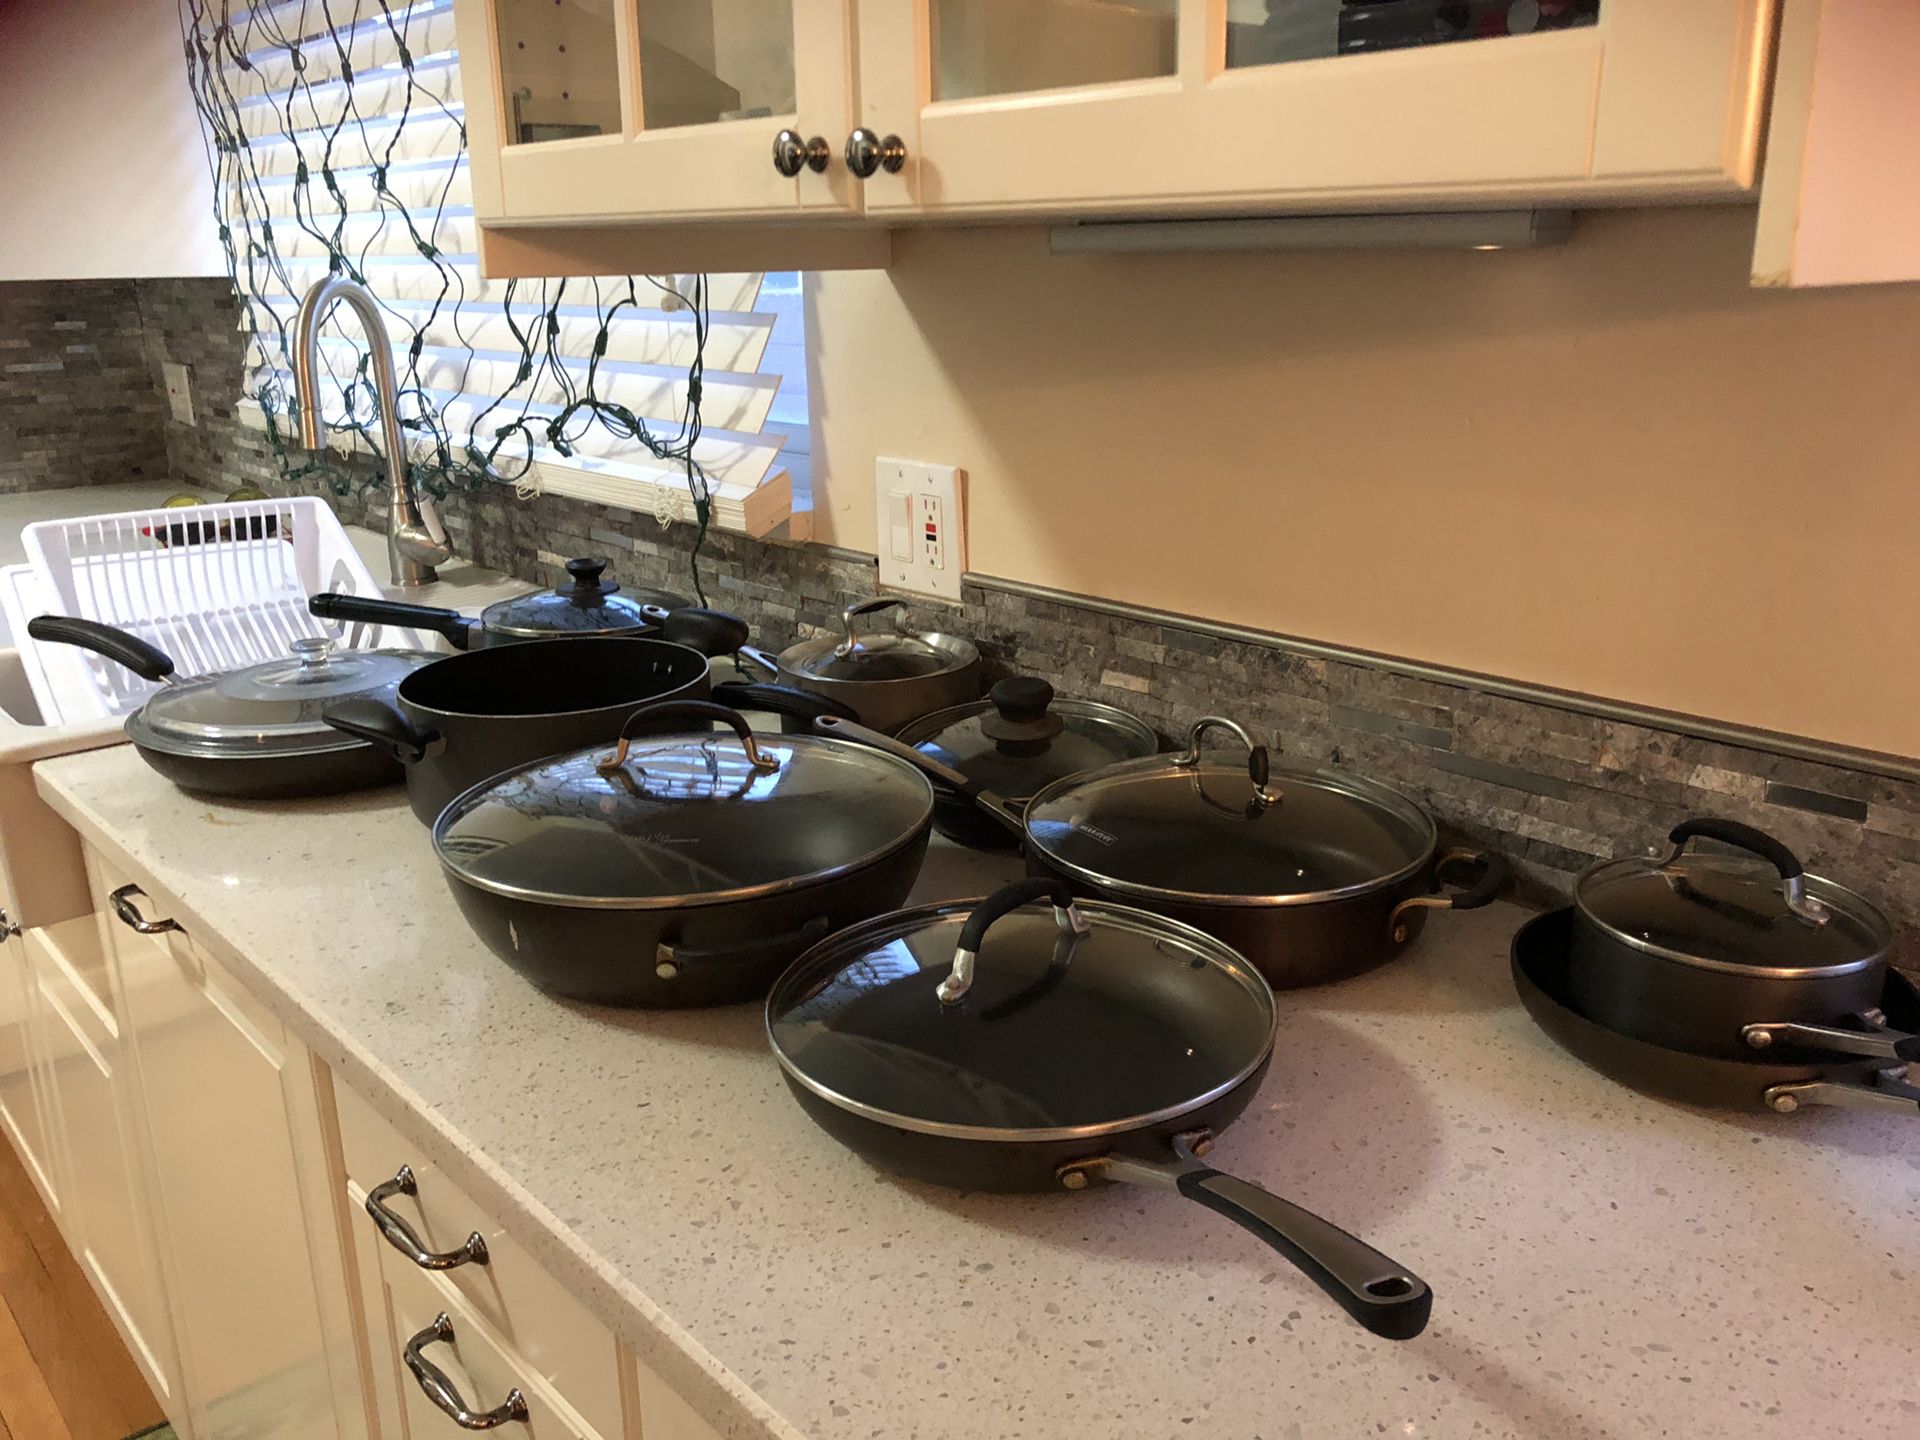 Kitchenware pots, pans, dishes, cups, bowls